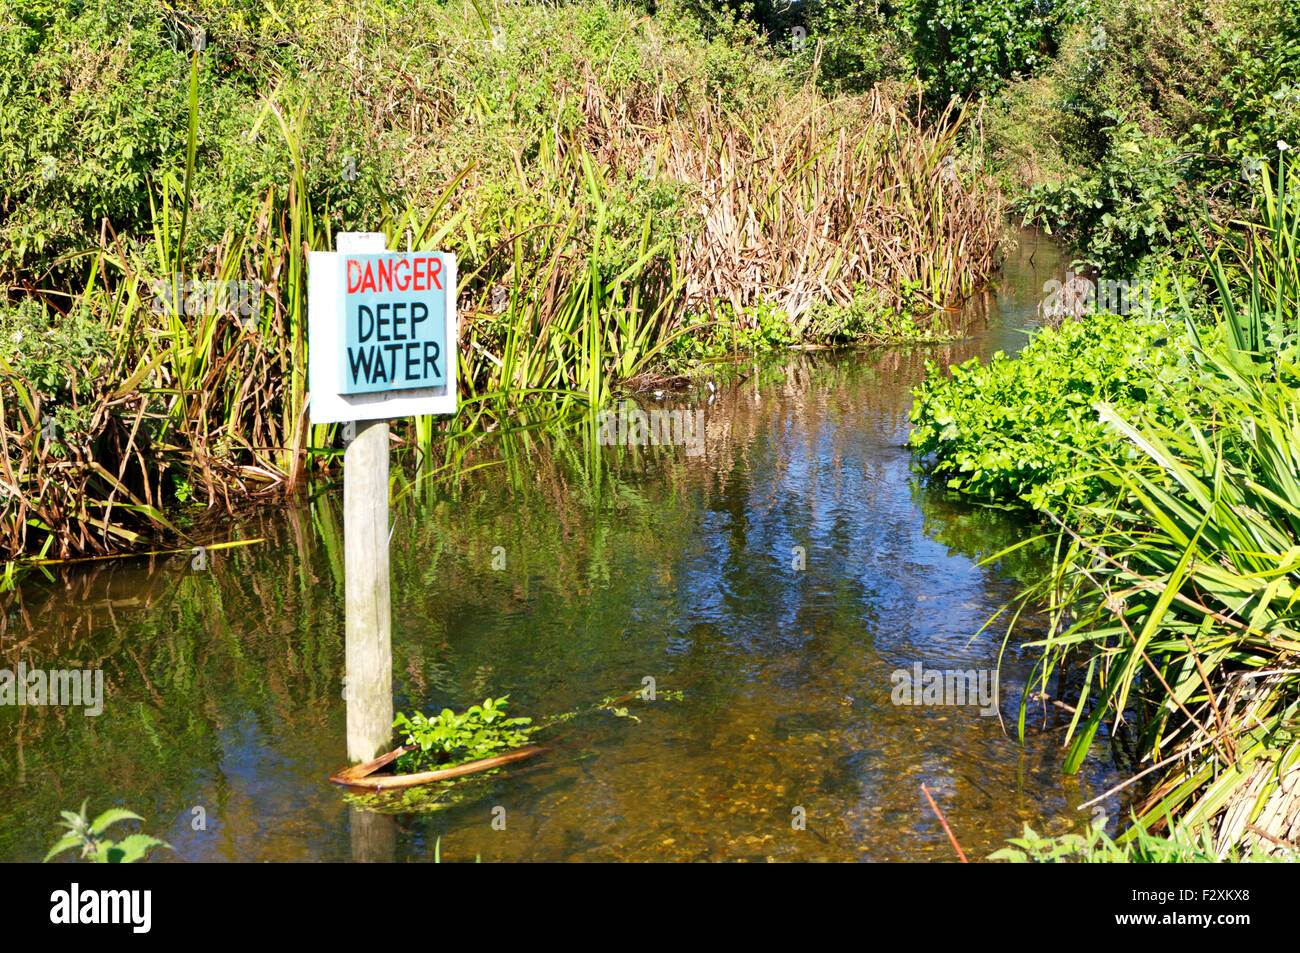 Danger - Deep Water sign in the River Glaven at Glandford, Norfolk, England, United Kingdom. Stock Photo